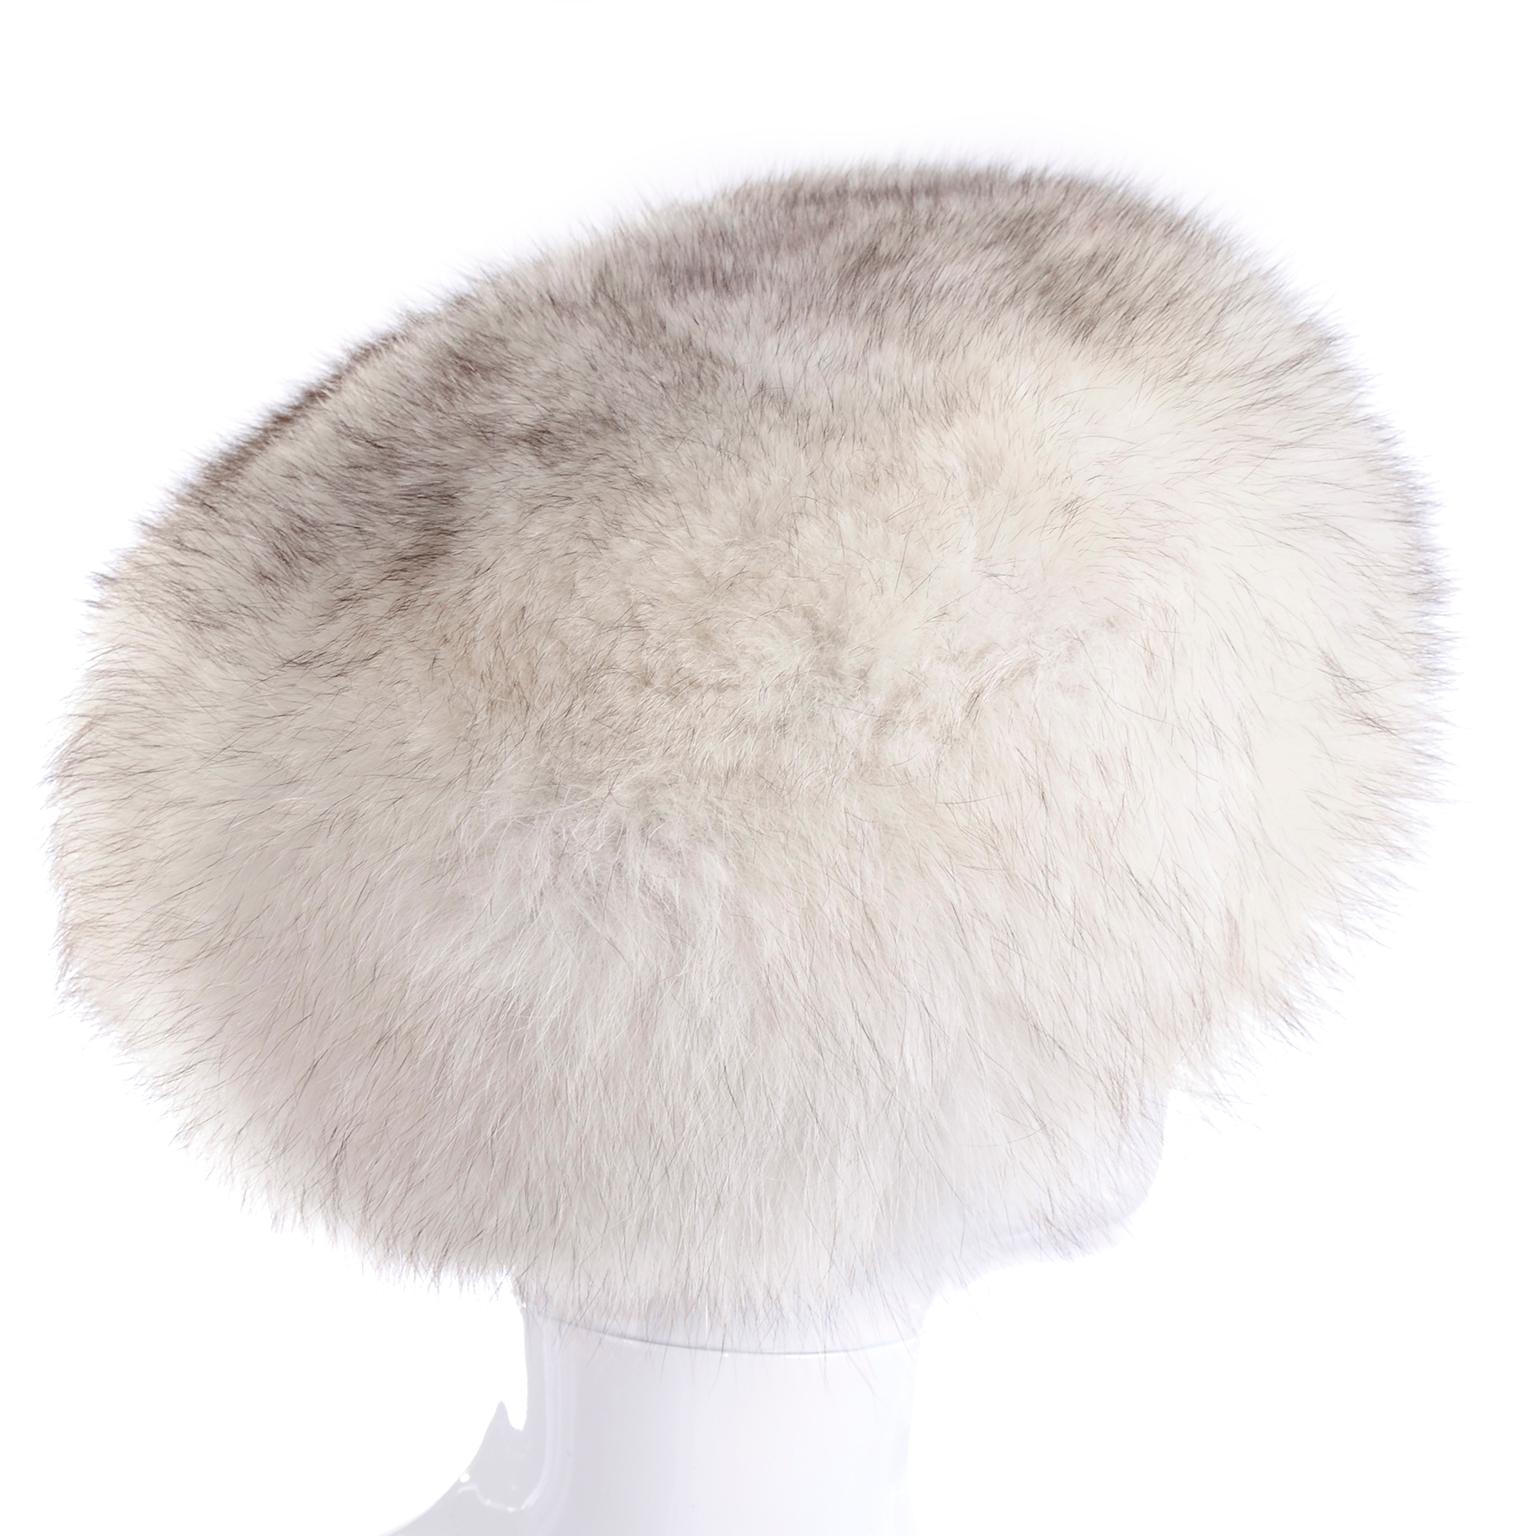 Beige Rare James McQuay Furrier Vintage Fox Fur Hat Made in New York